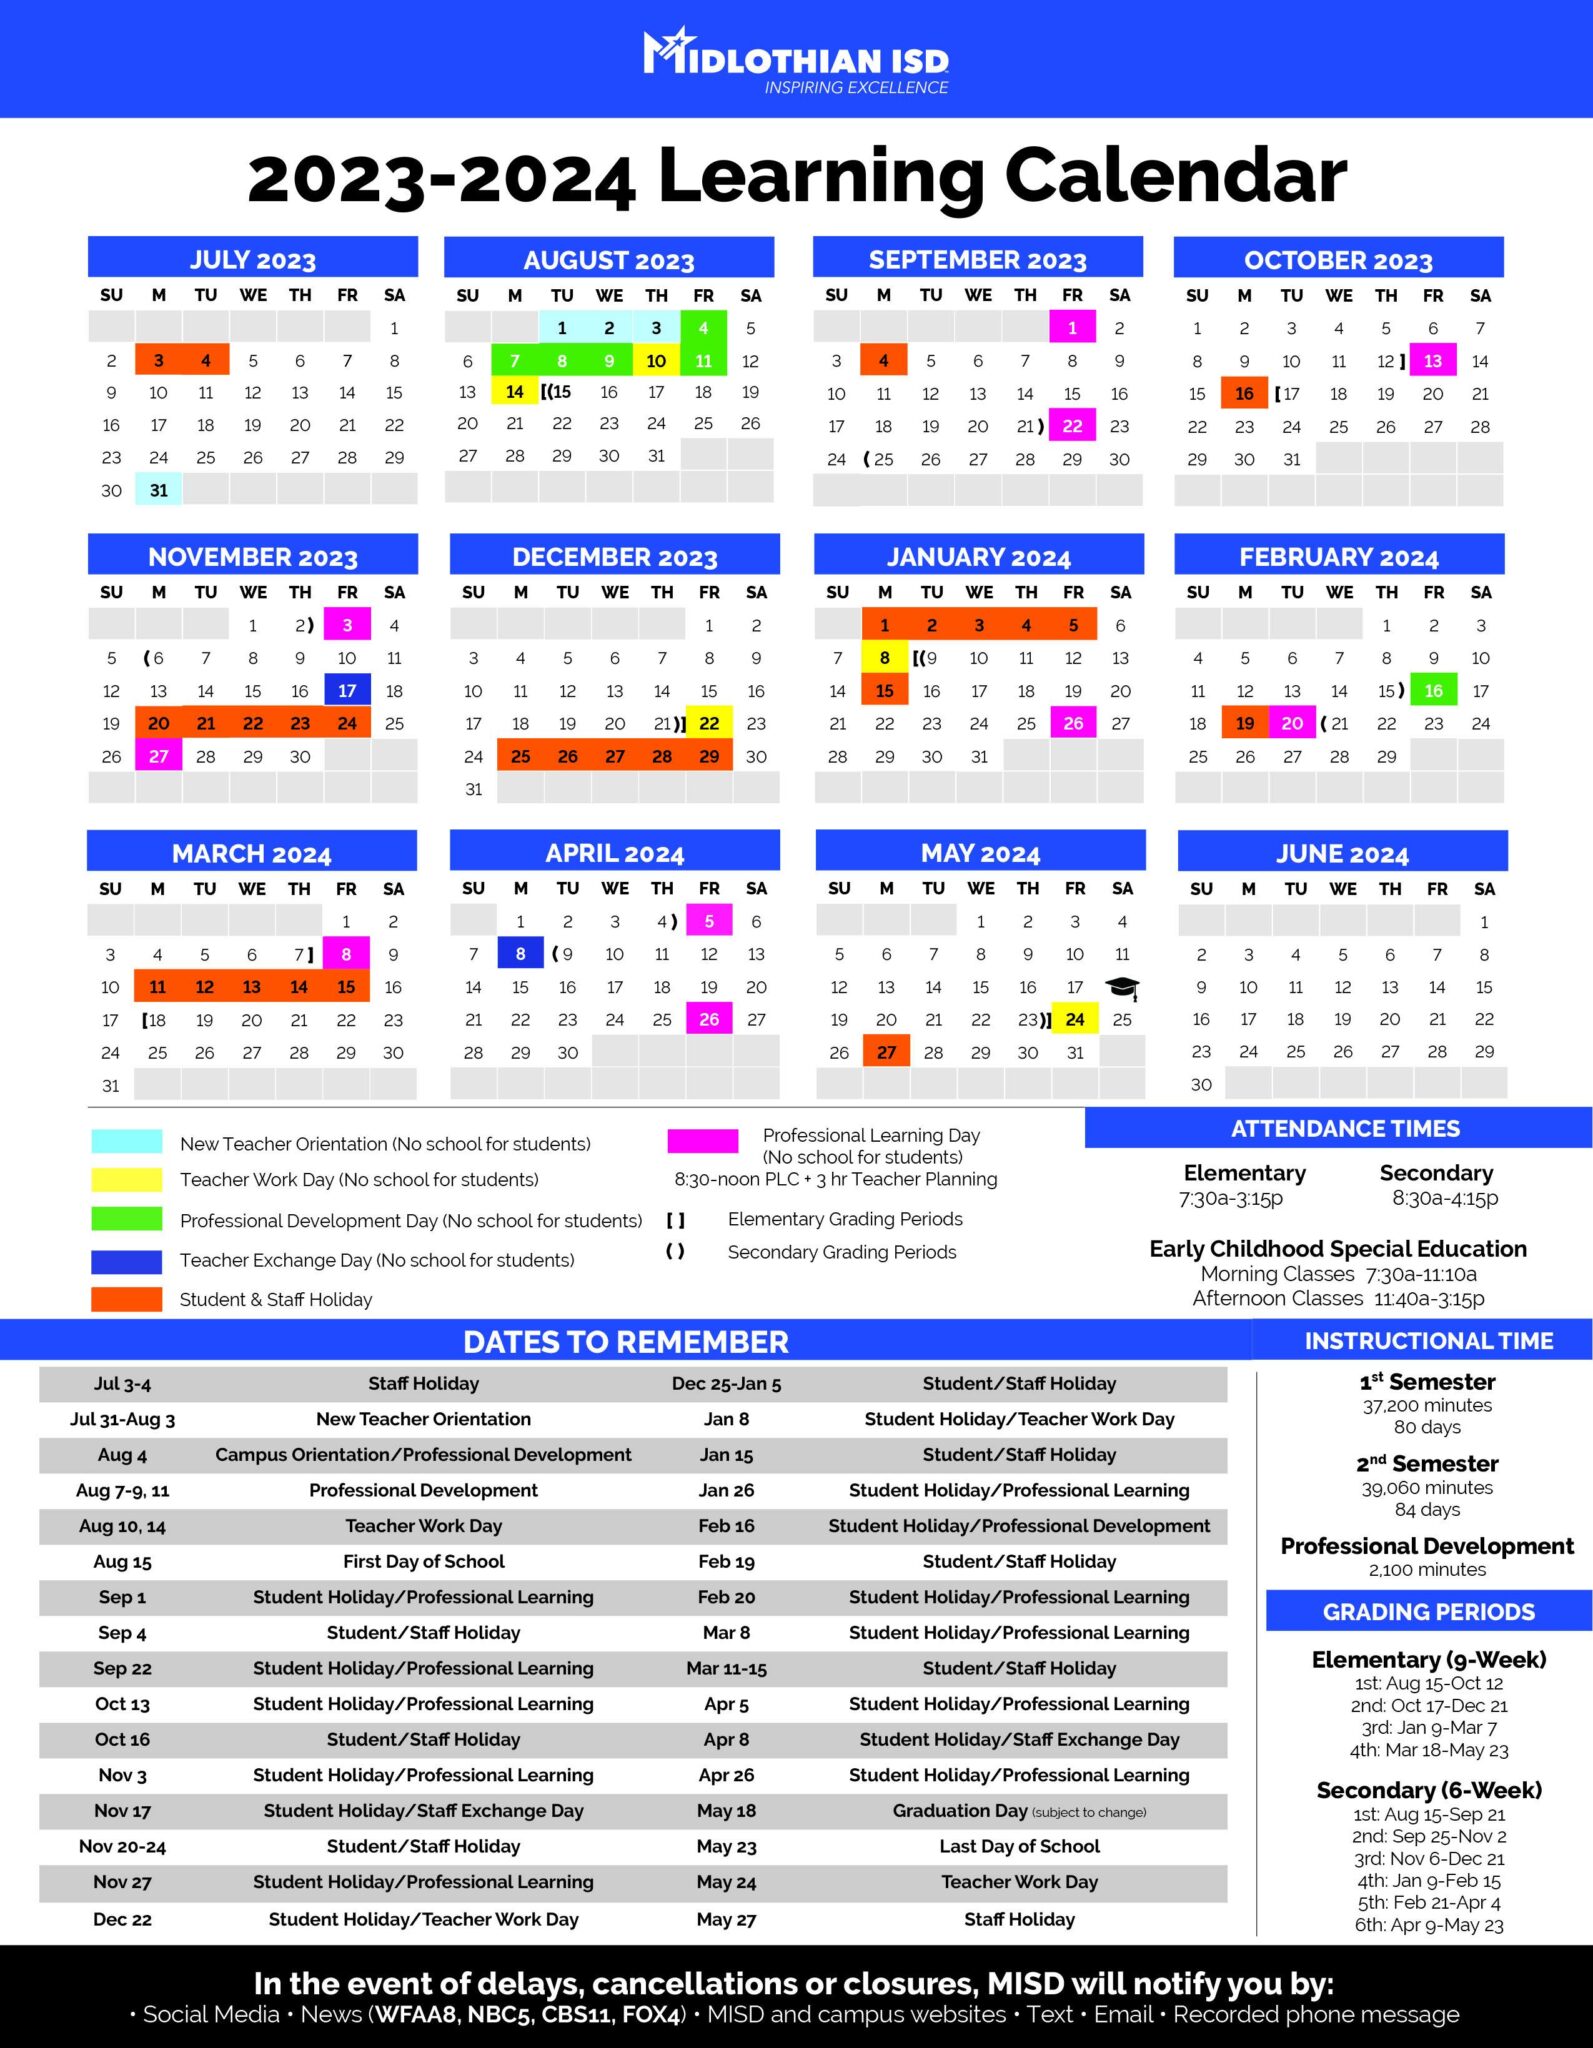 midlothian-isd-approves-hybrid-calendar-instead-of-four-day-week